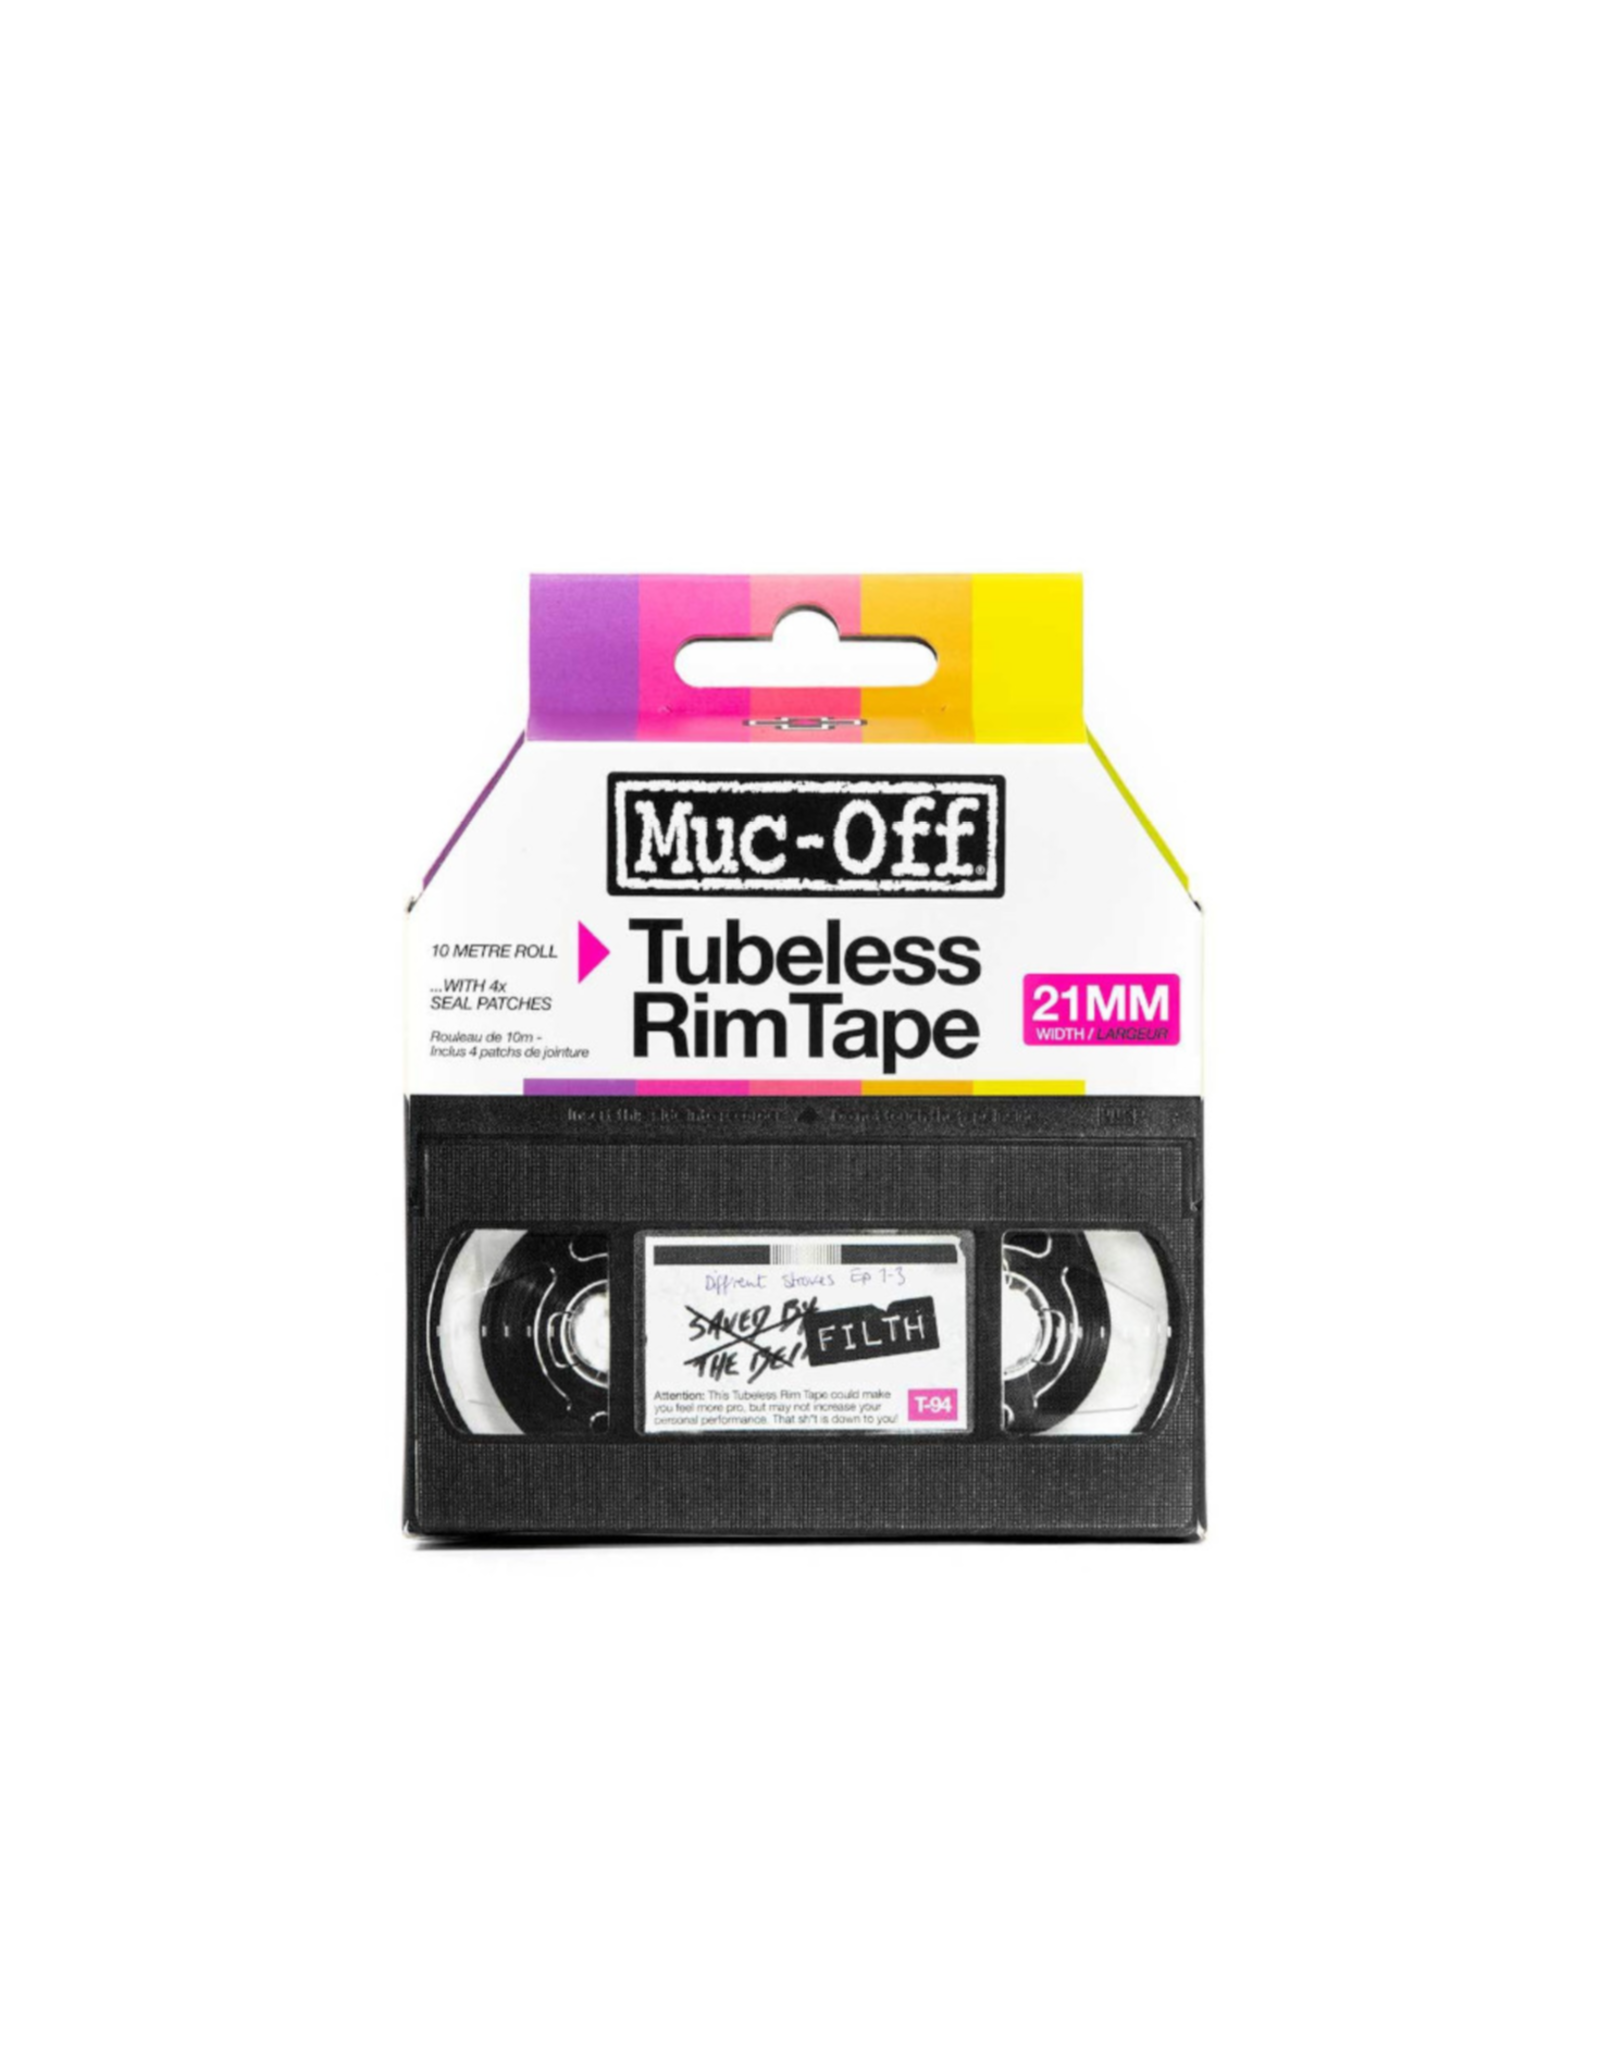 Muc-Off Tubeless Rim Tape 10m Roll 35mm Width